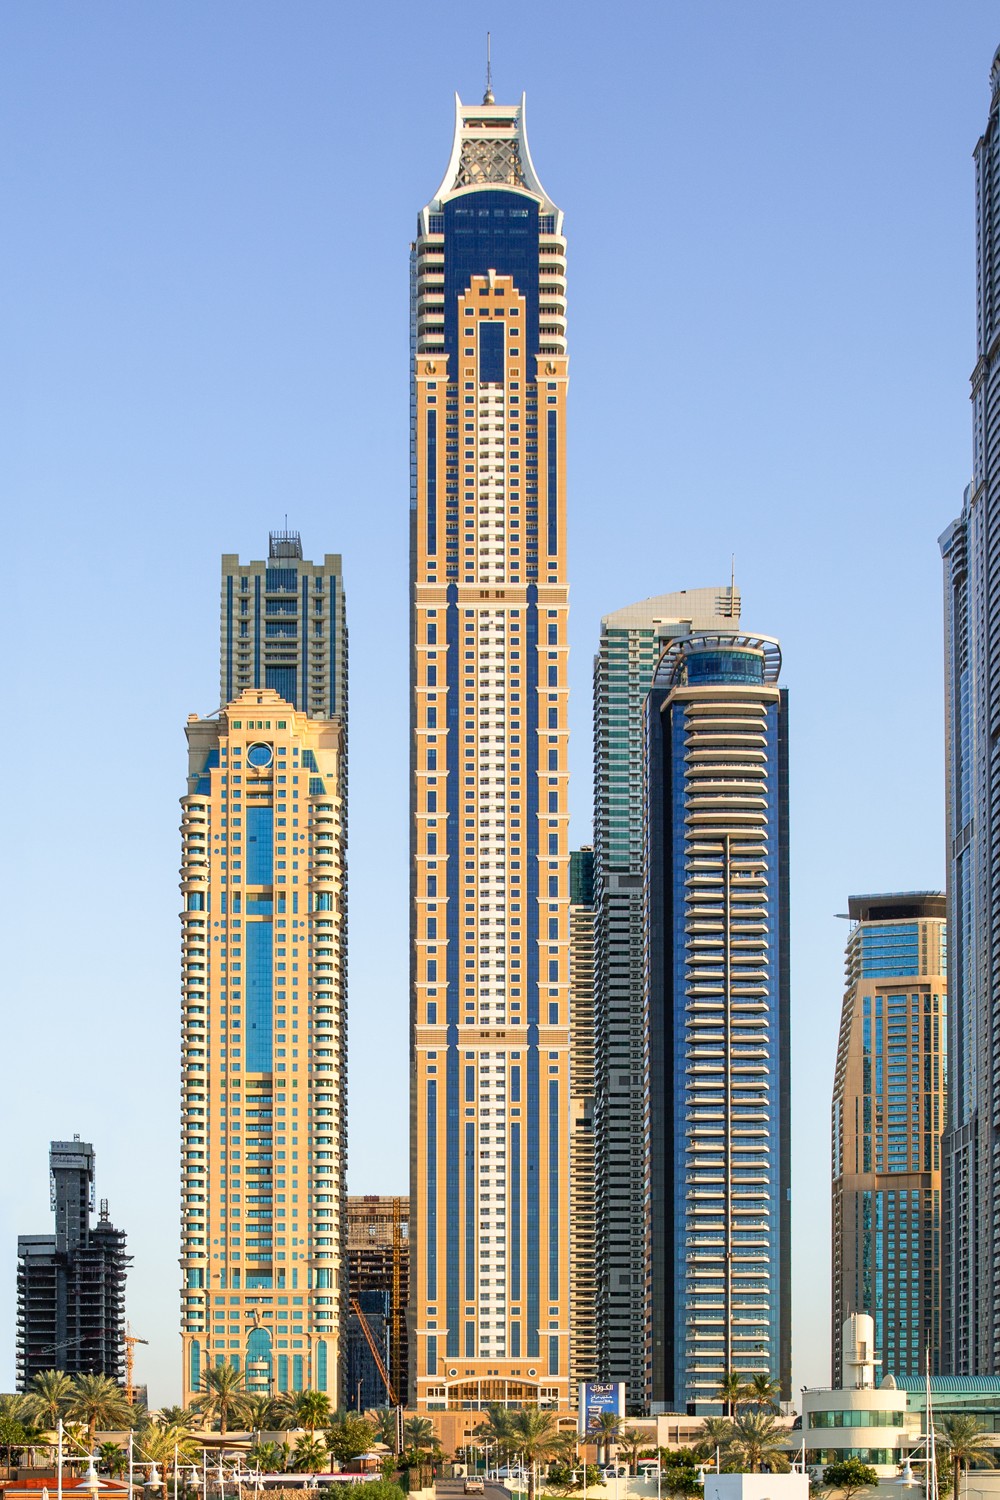 𝐄𝐥𝐢𝐭𝐞 𝐑𝐞𝐬𝐢𝐝𝐞𝐧𝐜𝐞 – World’s Third Tallest Residential Skyscraper